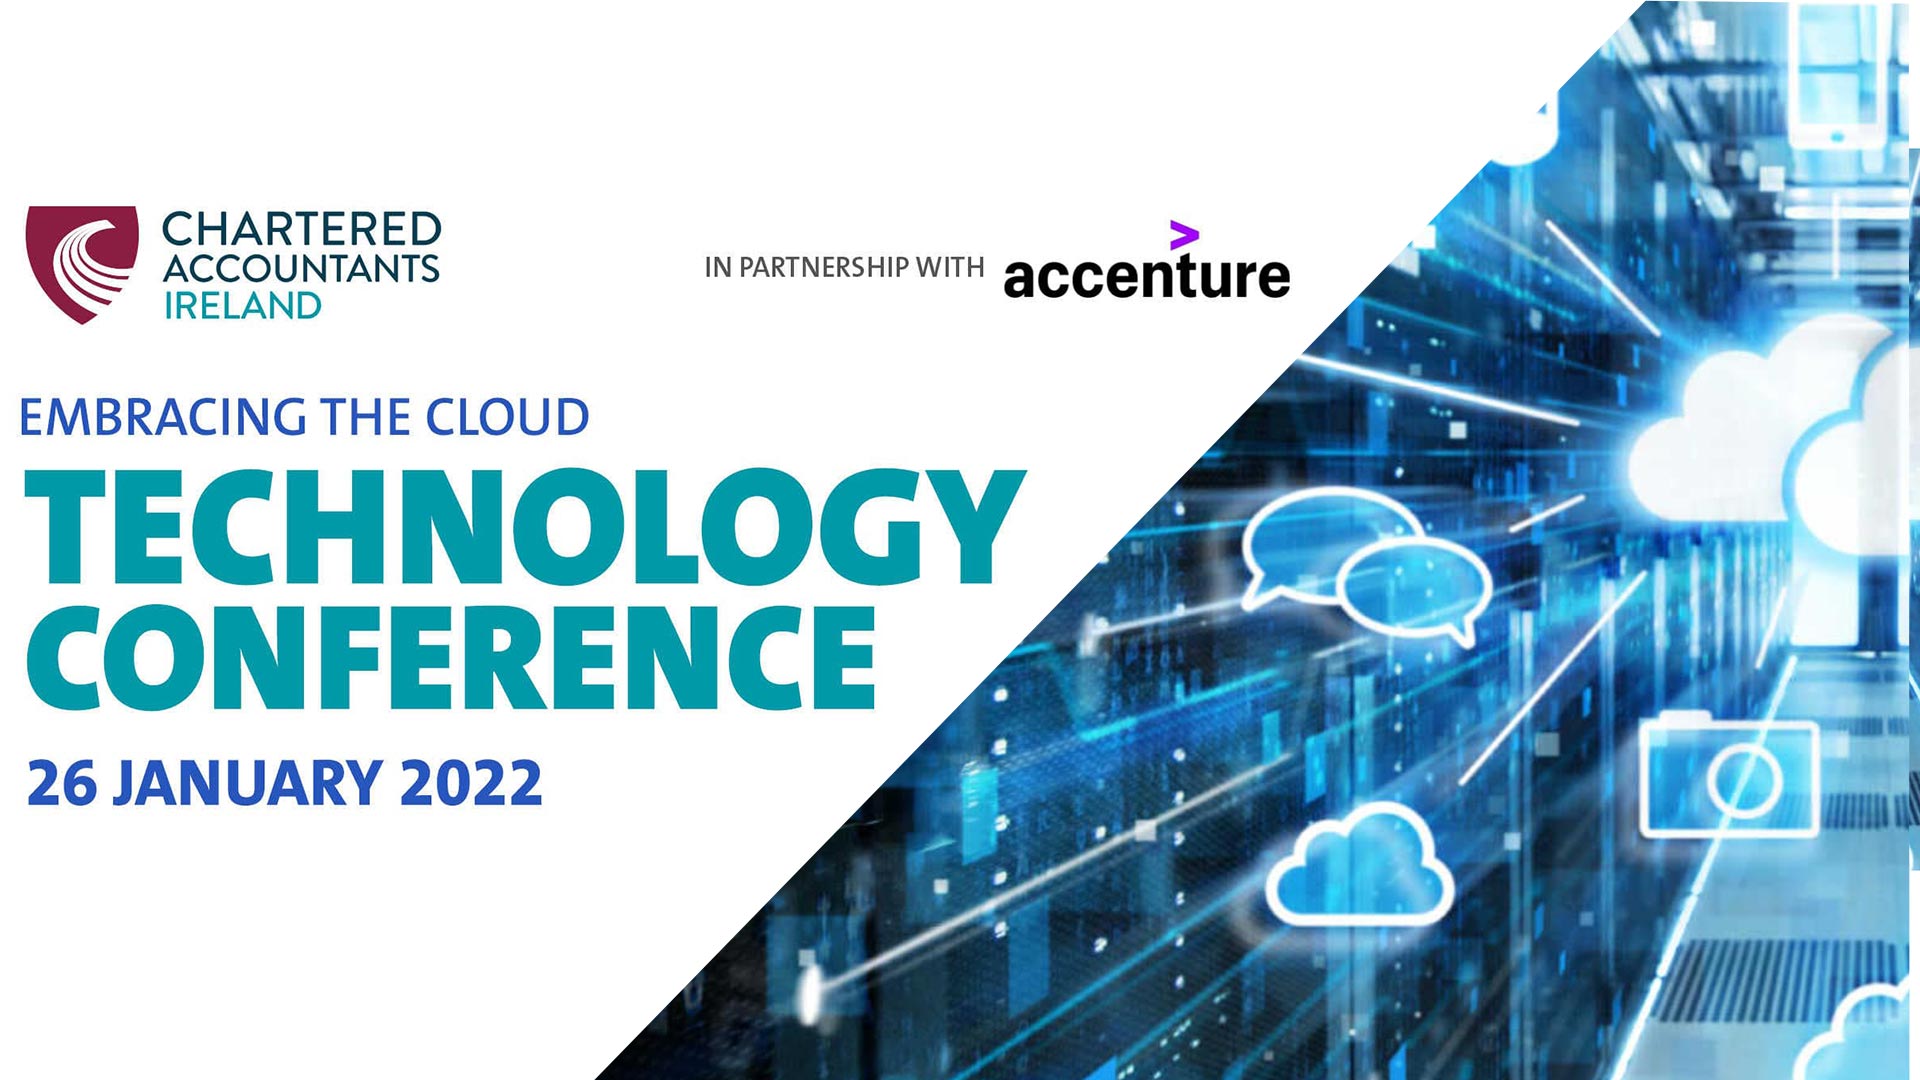 Technology Conference 26 January 2022